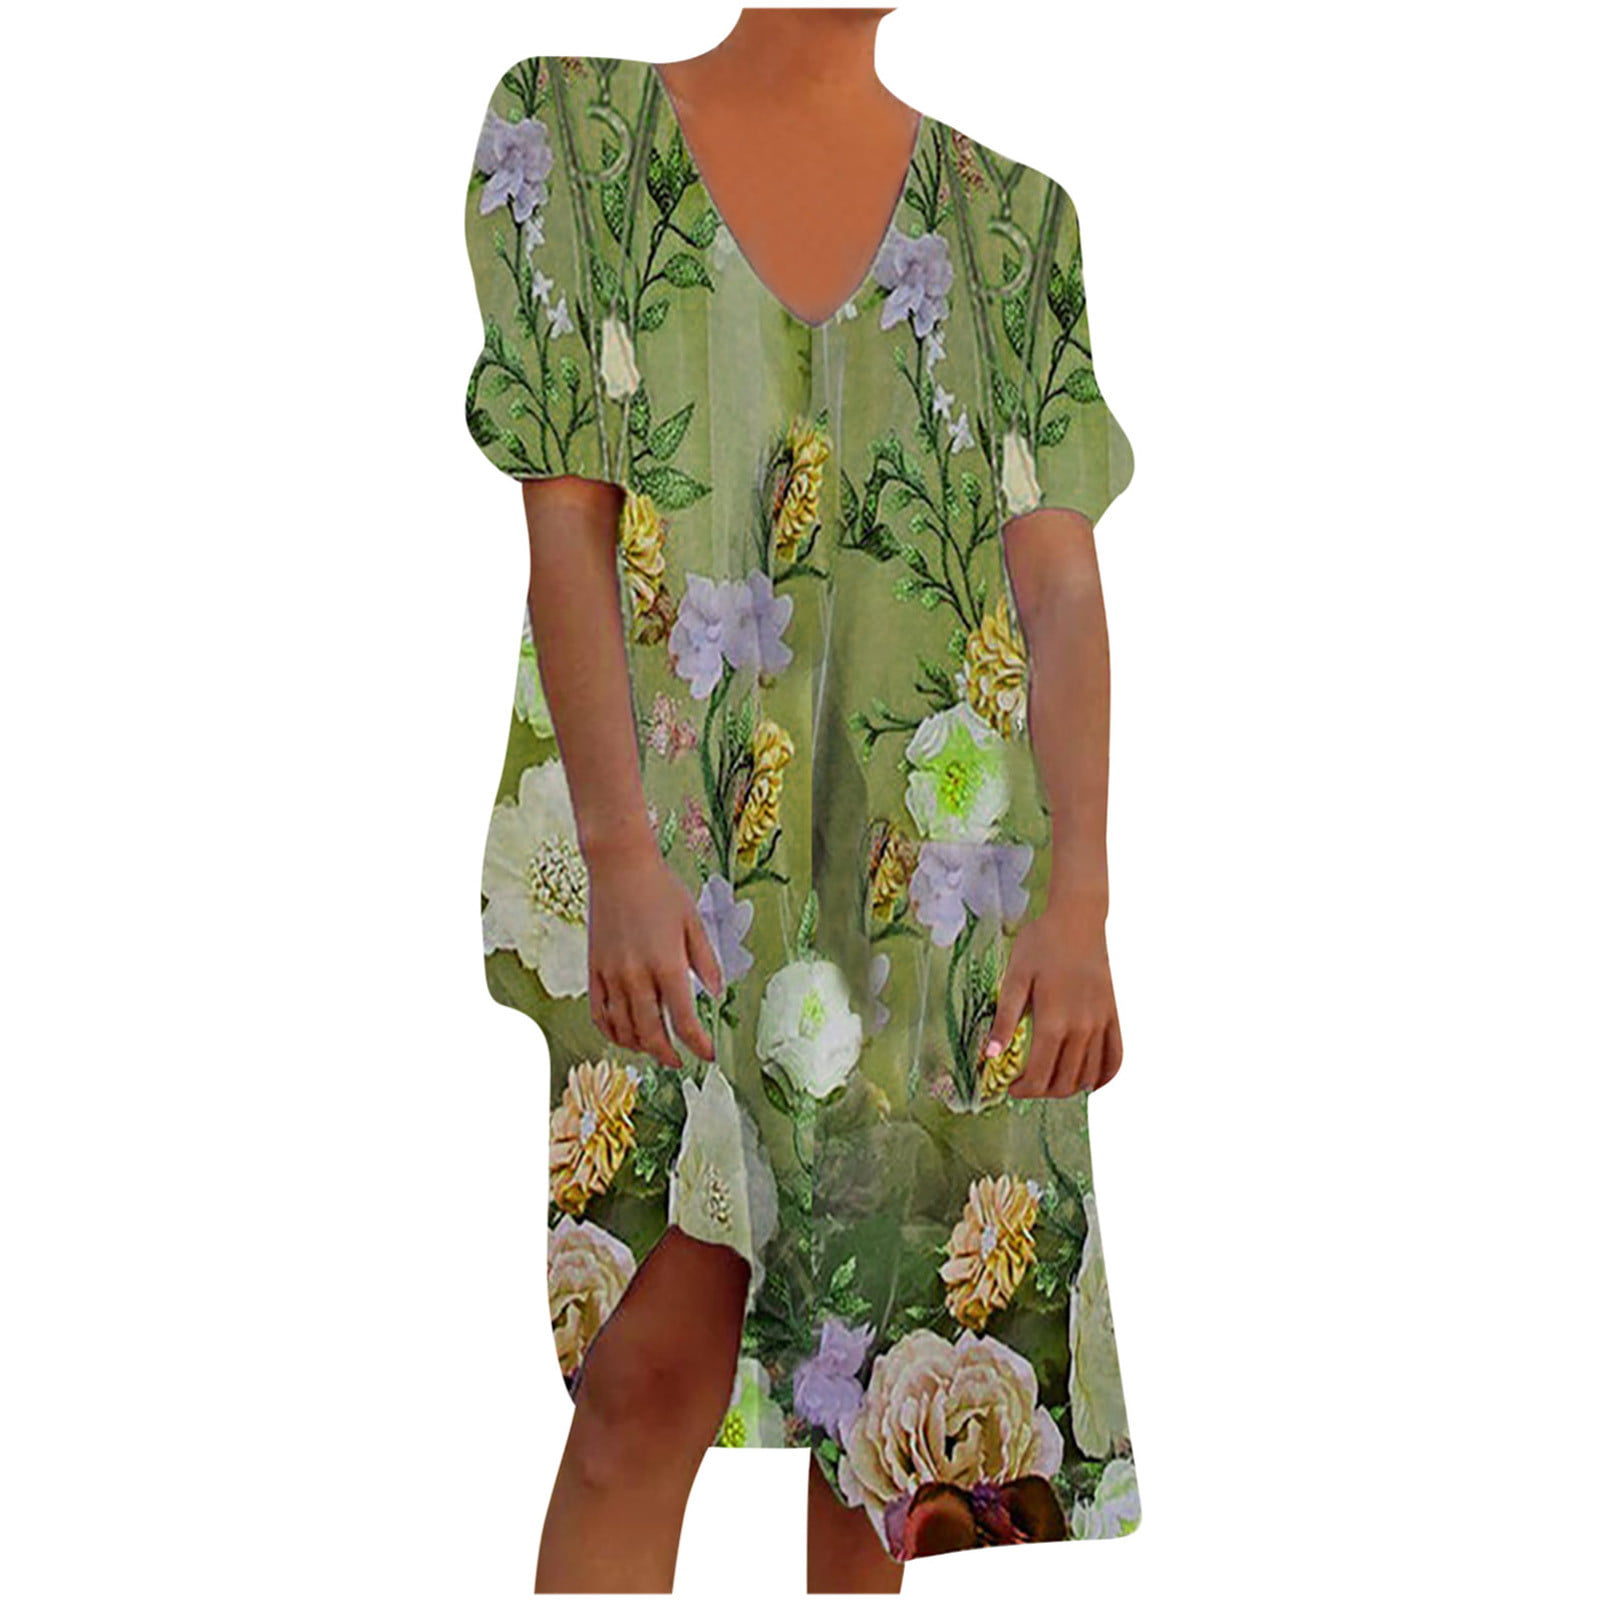 Swiusd Women Retro Floral Print A Line Midi Dresses Vintage Short Sleeve V Neck Swing Beach Party Sun Dresses Clearance 